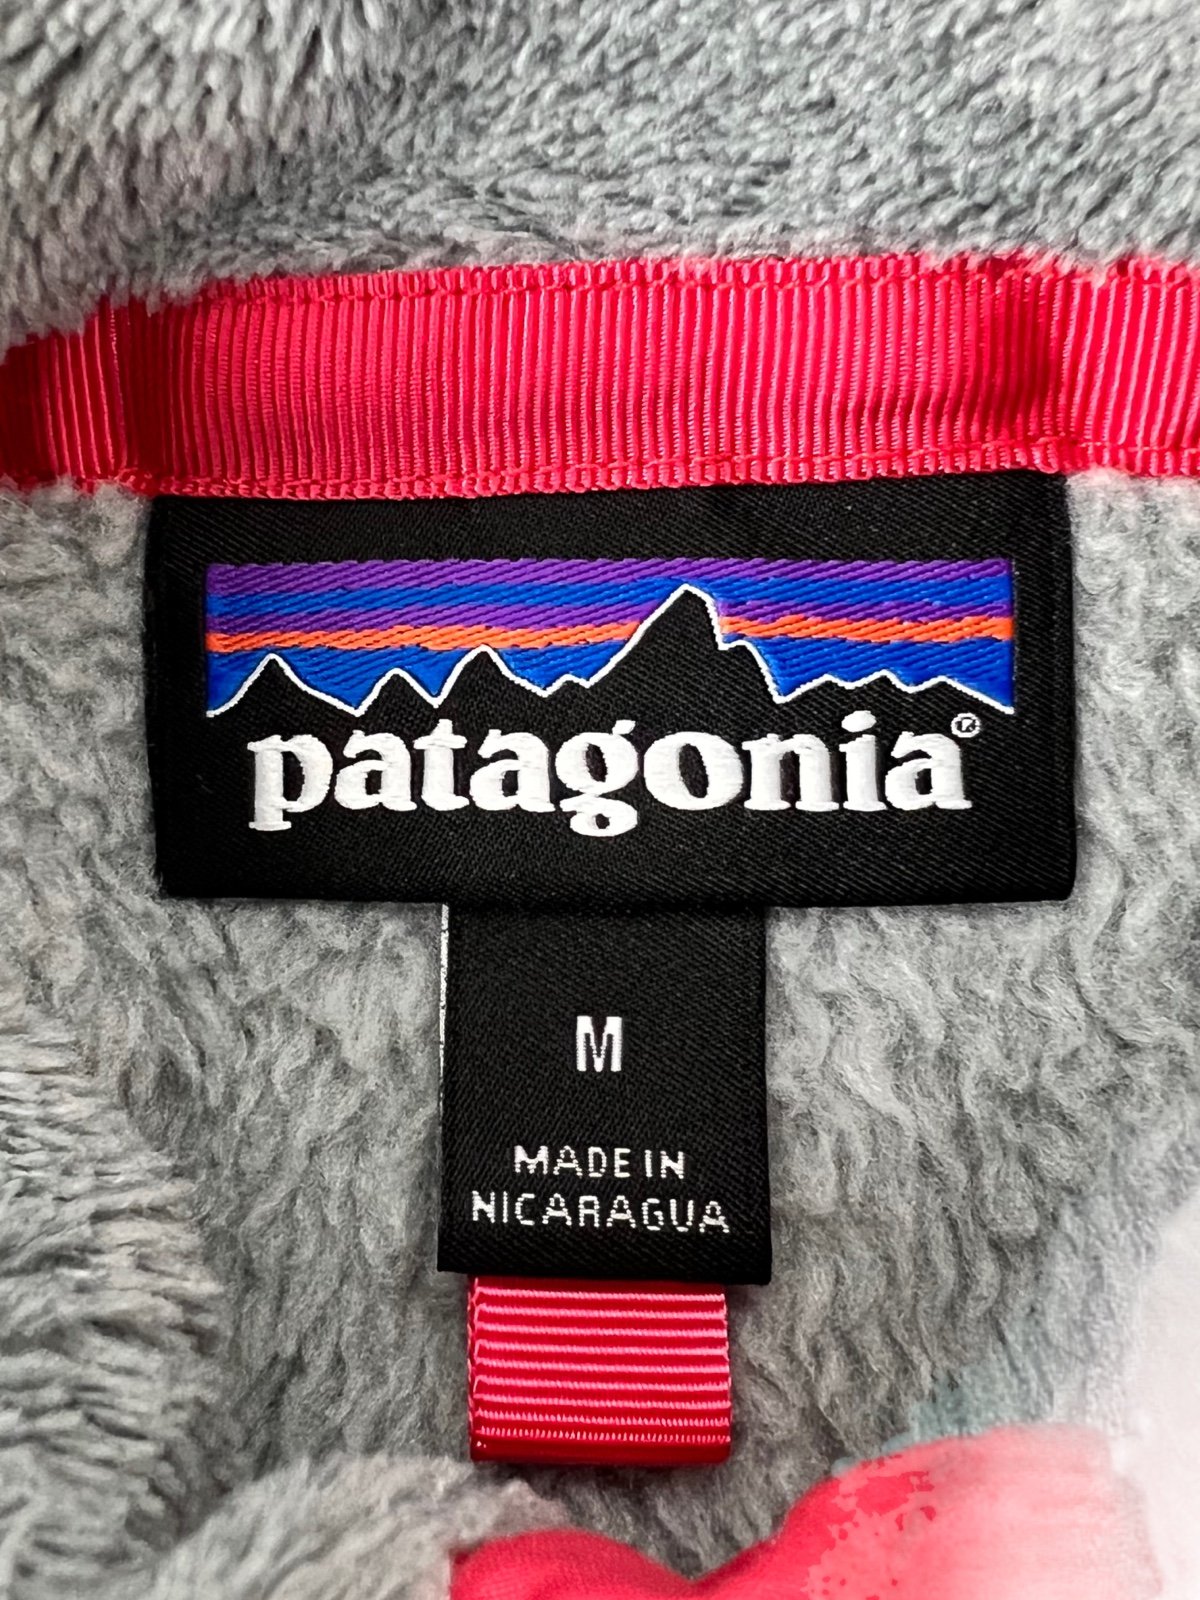 Comfortable Patagonia Womens Medium Pullover Re Tool Snap T Fleece Jacket Gray 25442 EUC LHoTh0sXD Factory Price